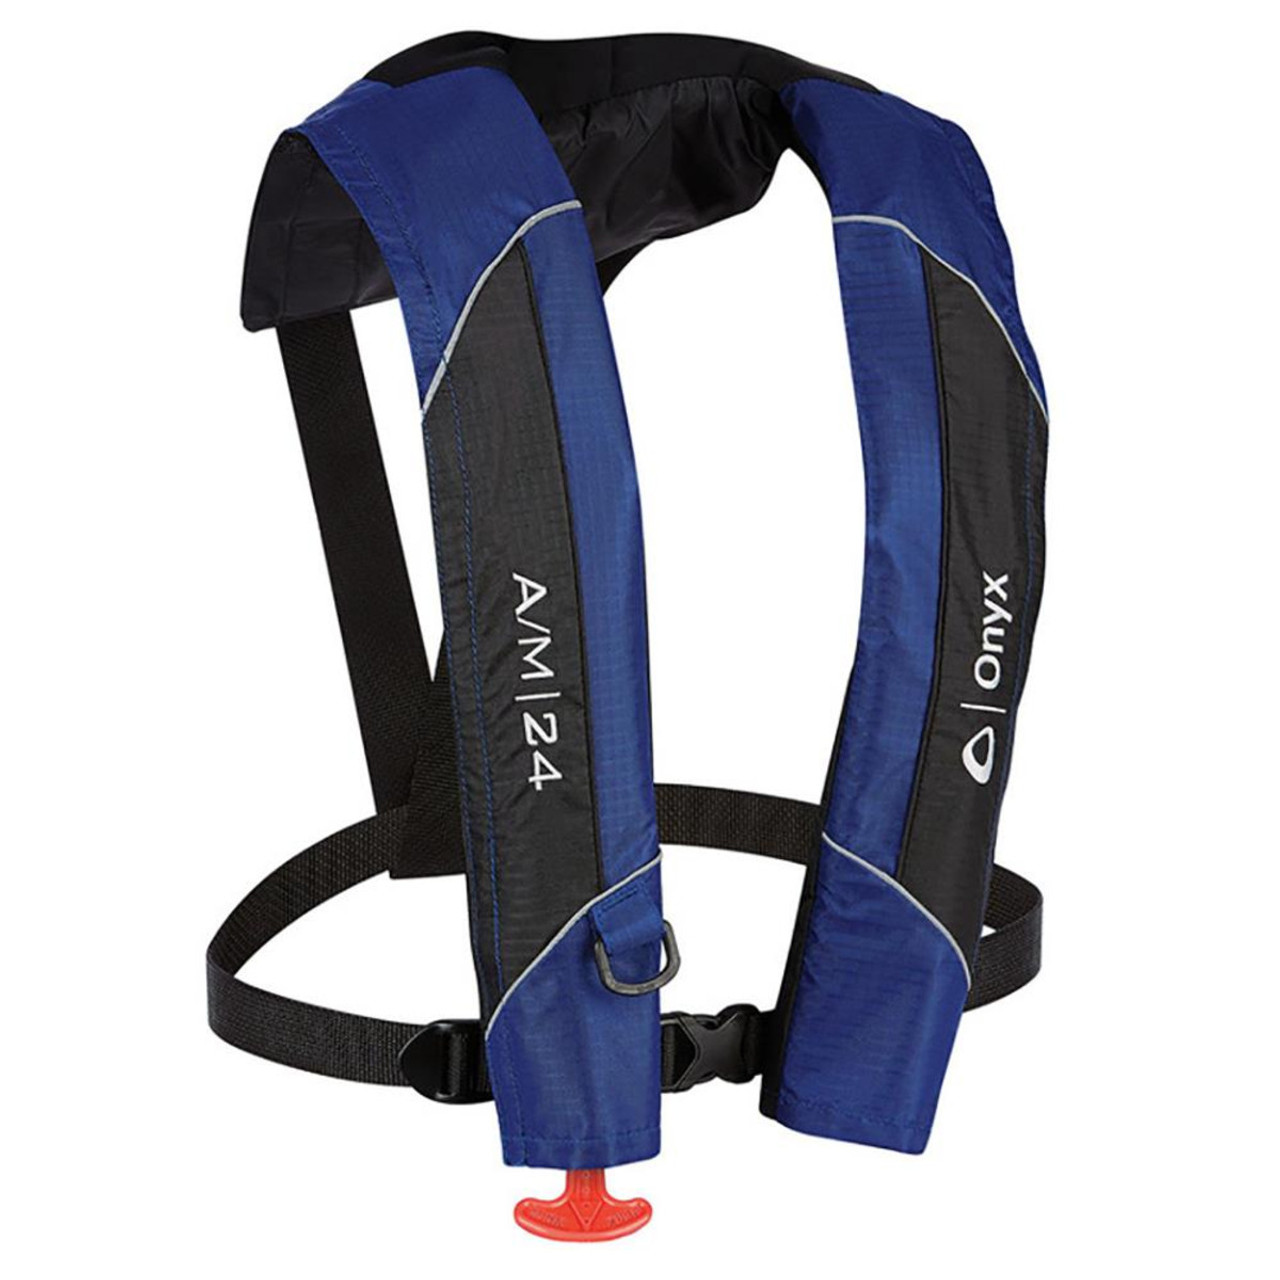 Onyx A/M-24 Automatic / Manual Inflatable Life Jacket - Blue